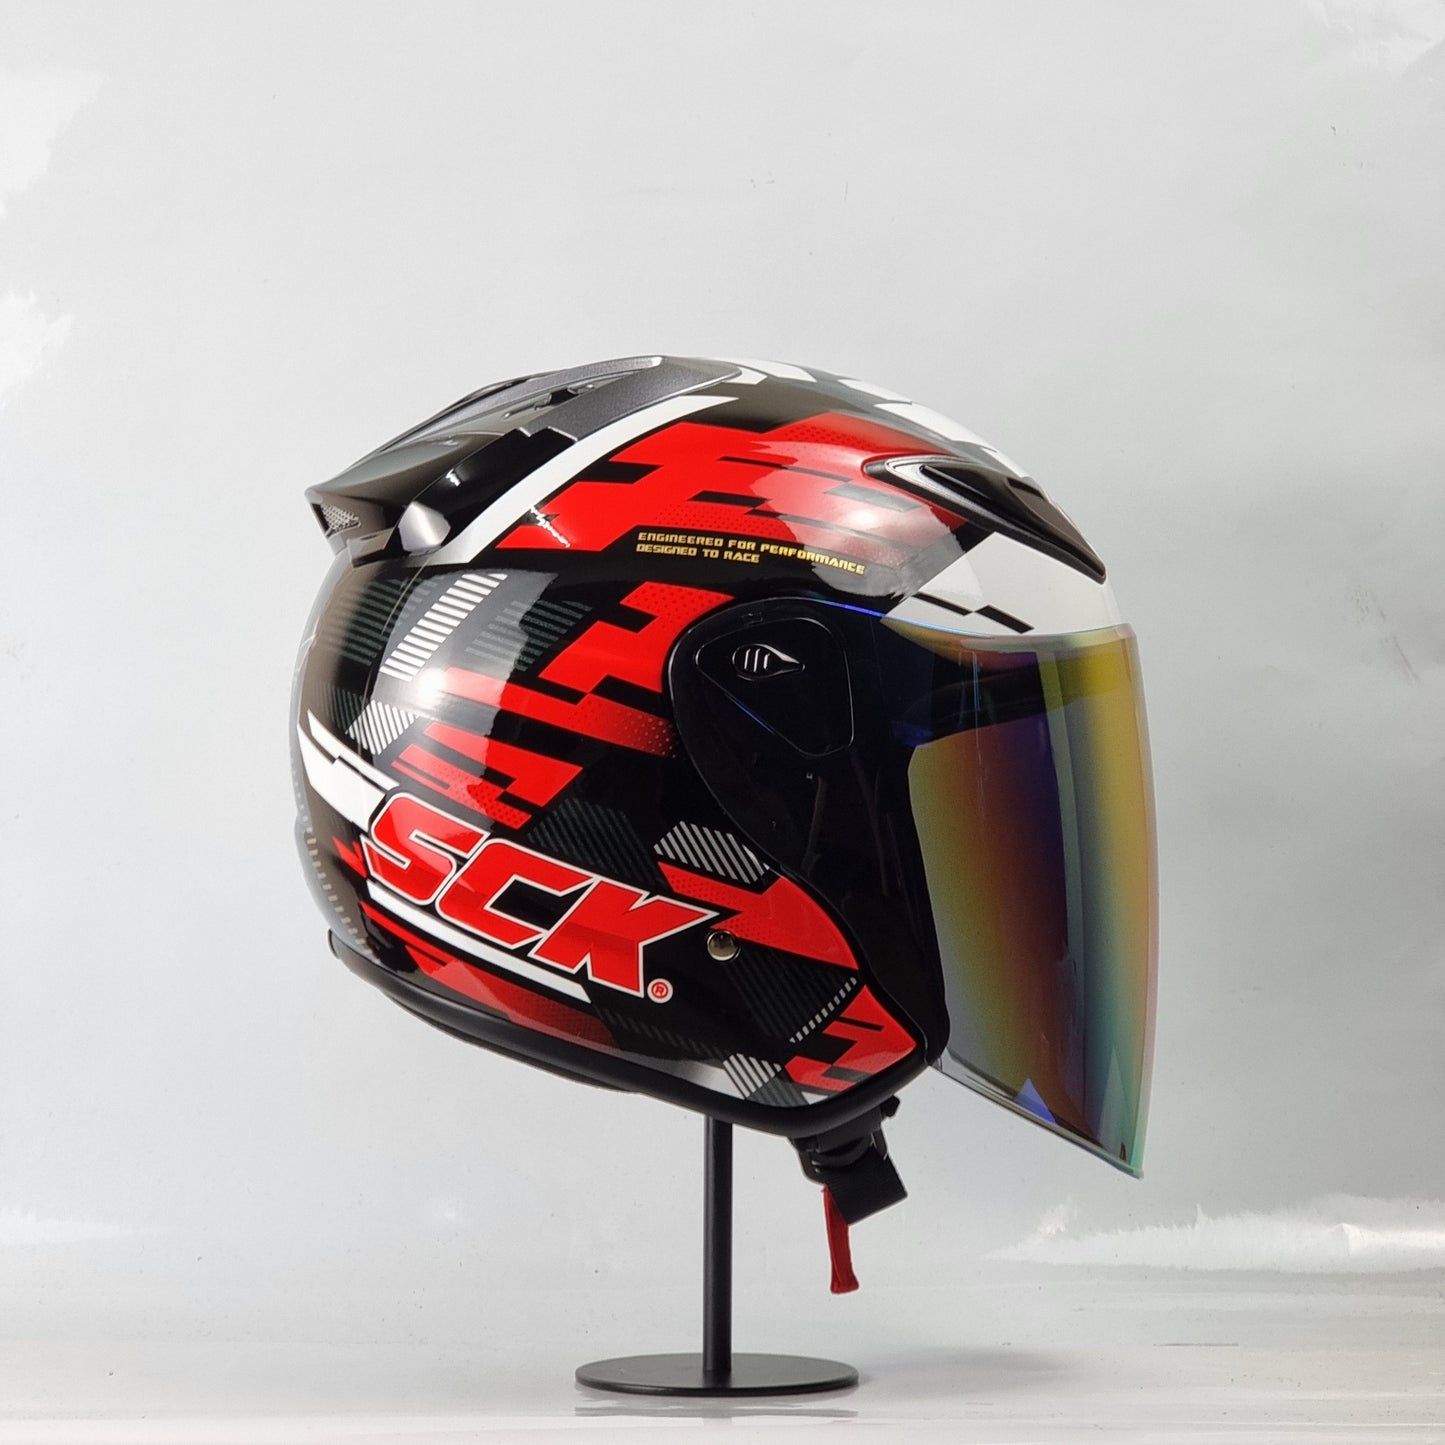 NHK Helmet R6 v2 SCK (Black/Red Glossy)